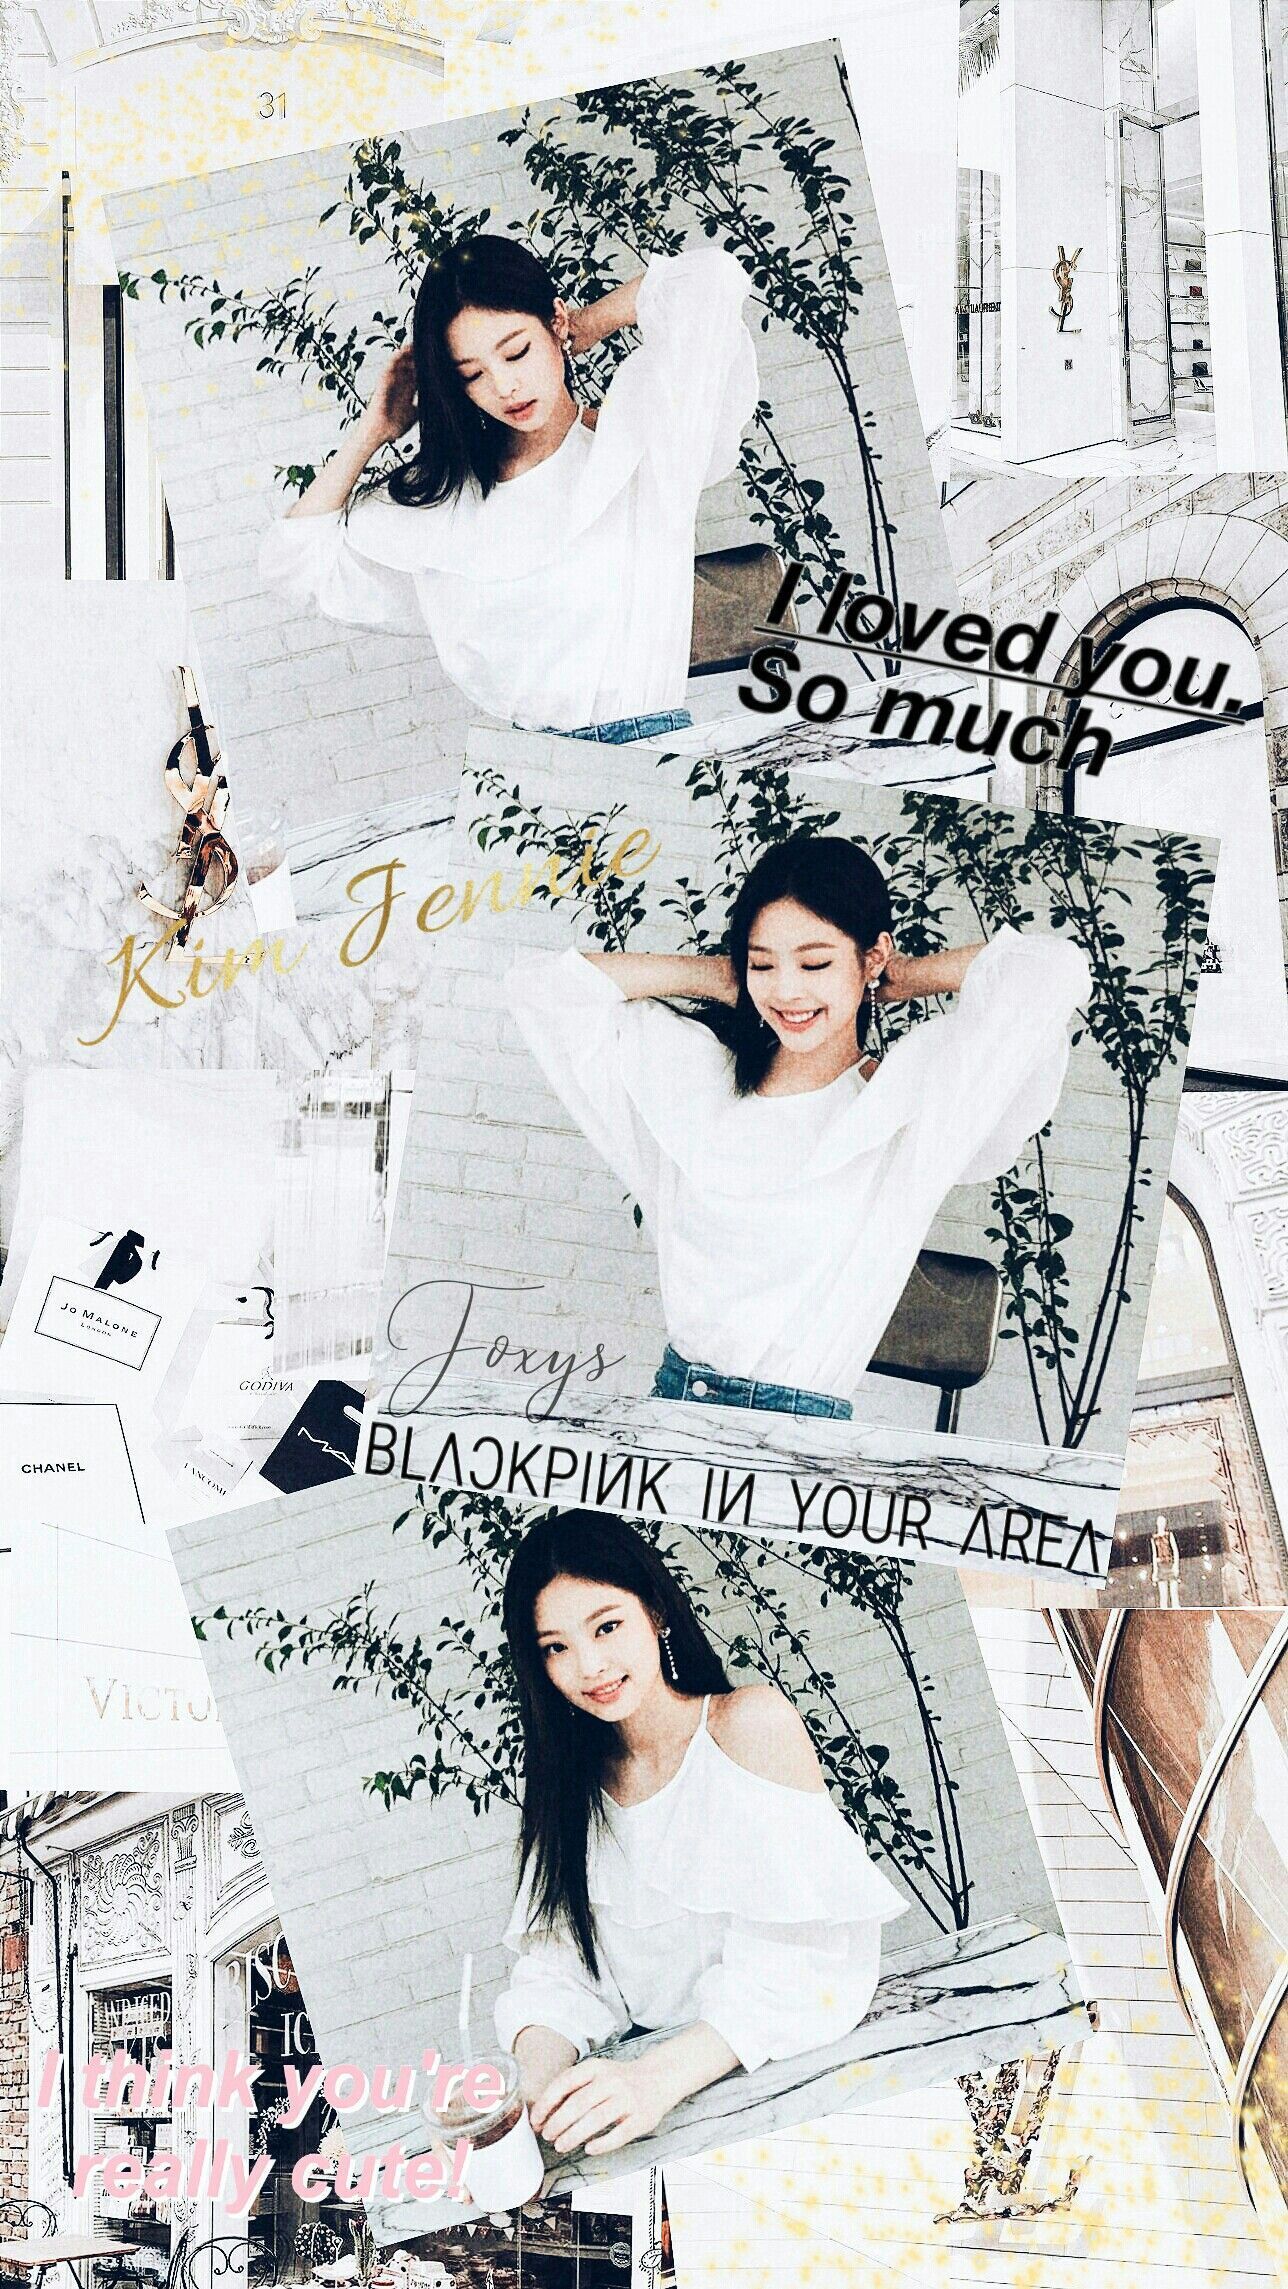 I made a collage for the lovely Jeongyeon! I hope you like it! - Jennie